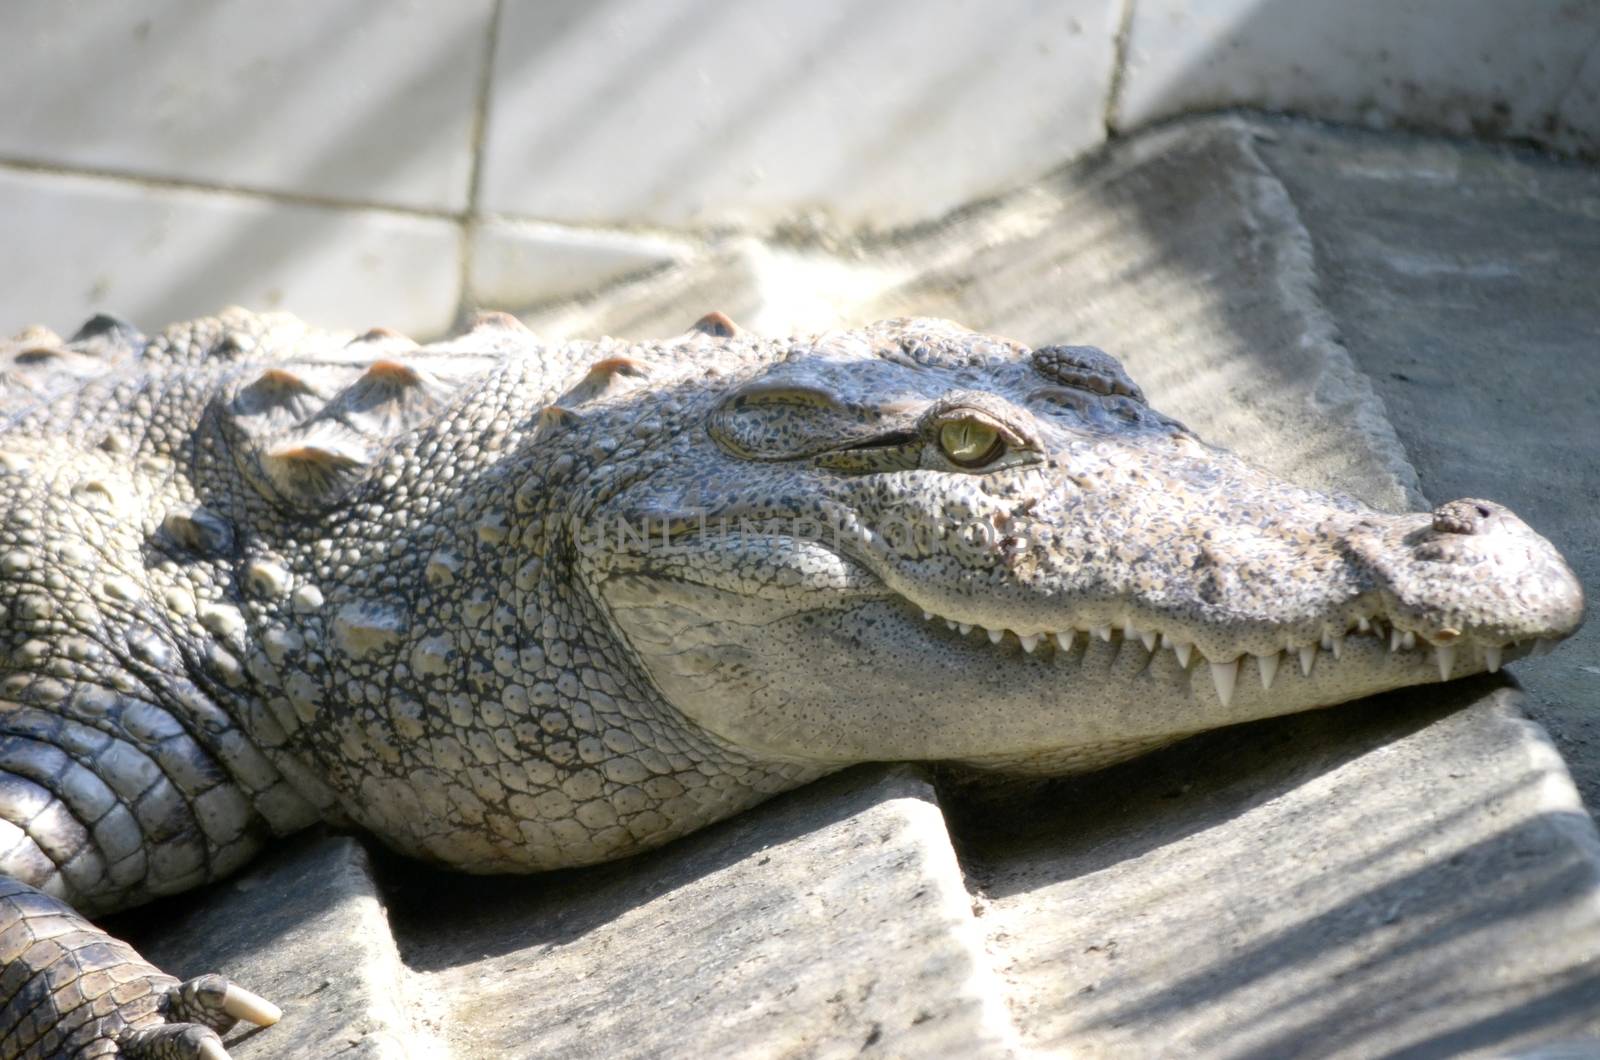 Nile Crocodile very closeup image capture by Emdaduljs